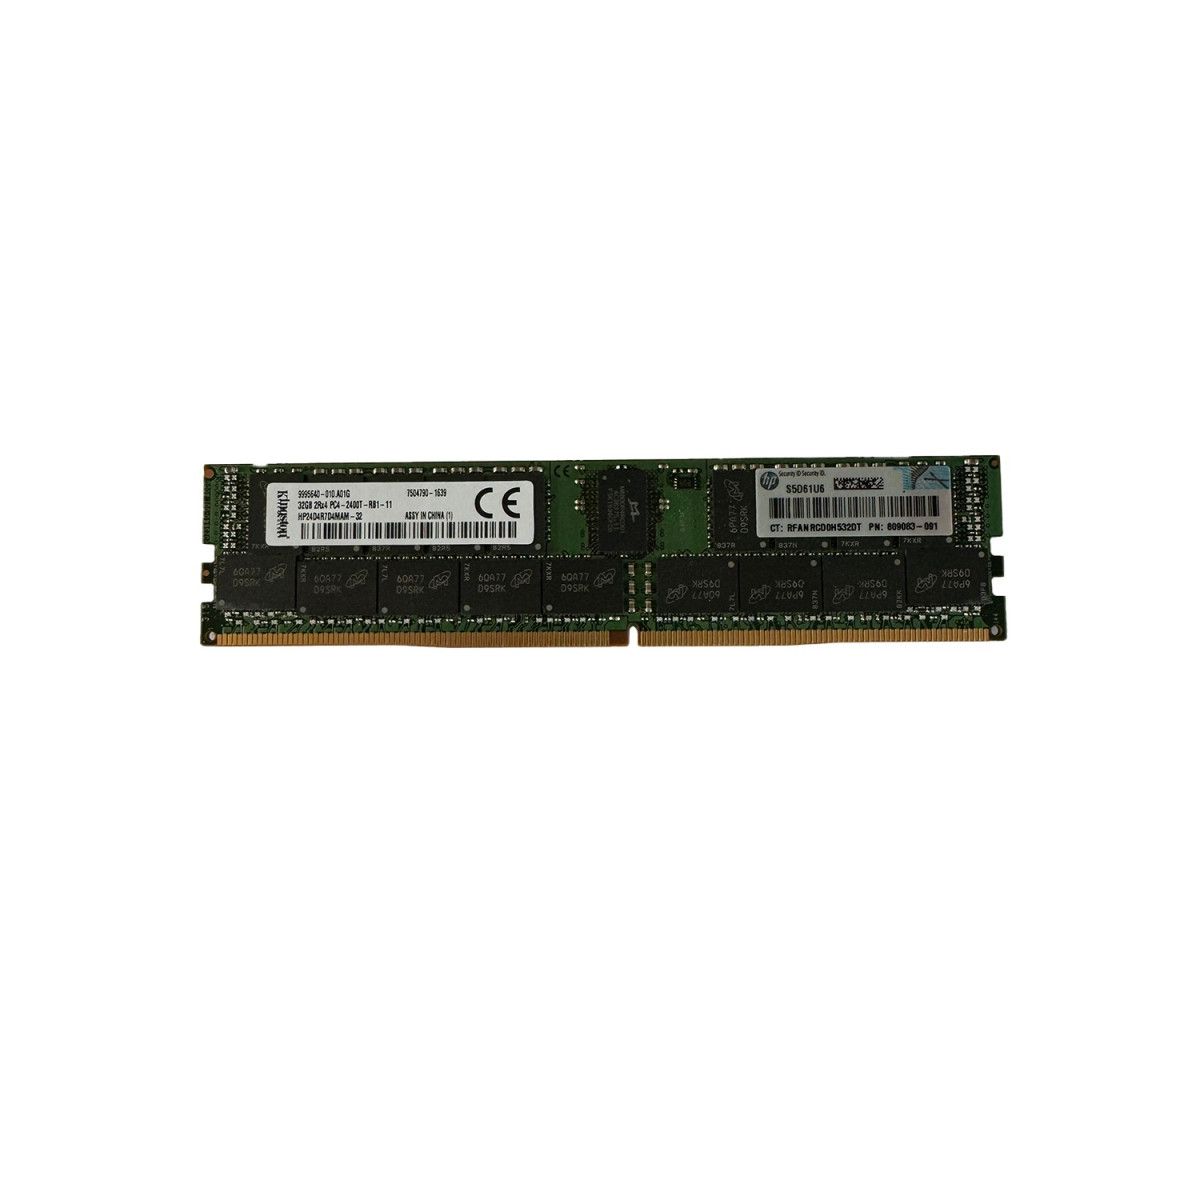 HPE Original 32GB (1x32GB) Dual Rank x4 DDR4-2400 ECC Registriert 809083-091 1 - Memstar 